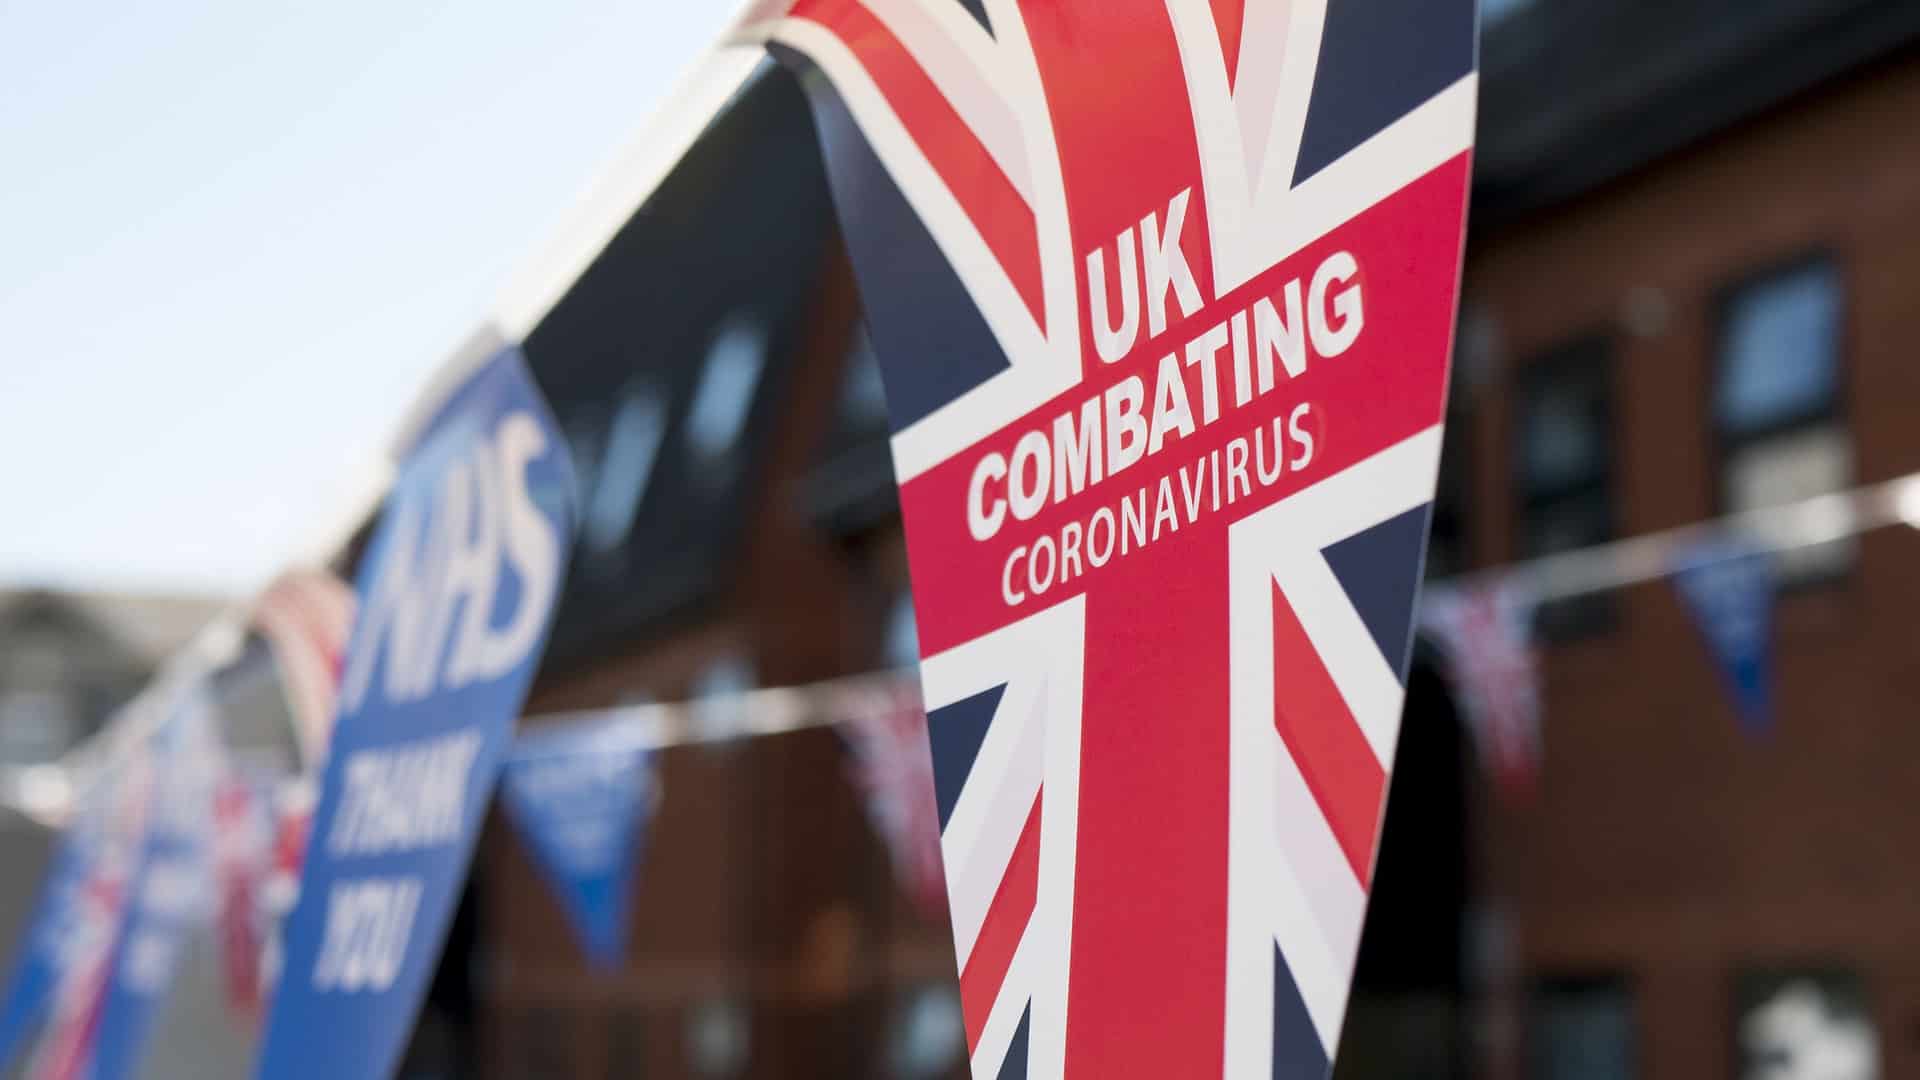 Photo of UK flag Combating Coronavirus by groovelanddesigns